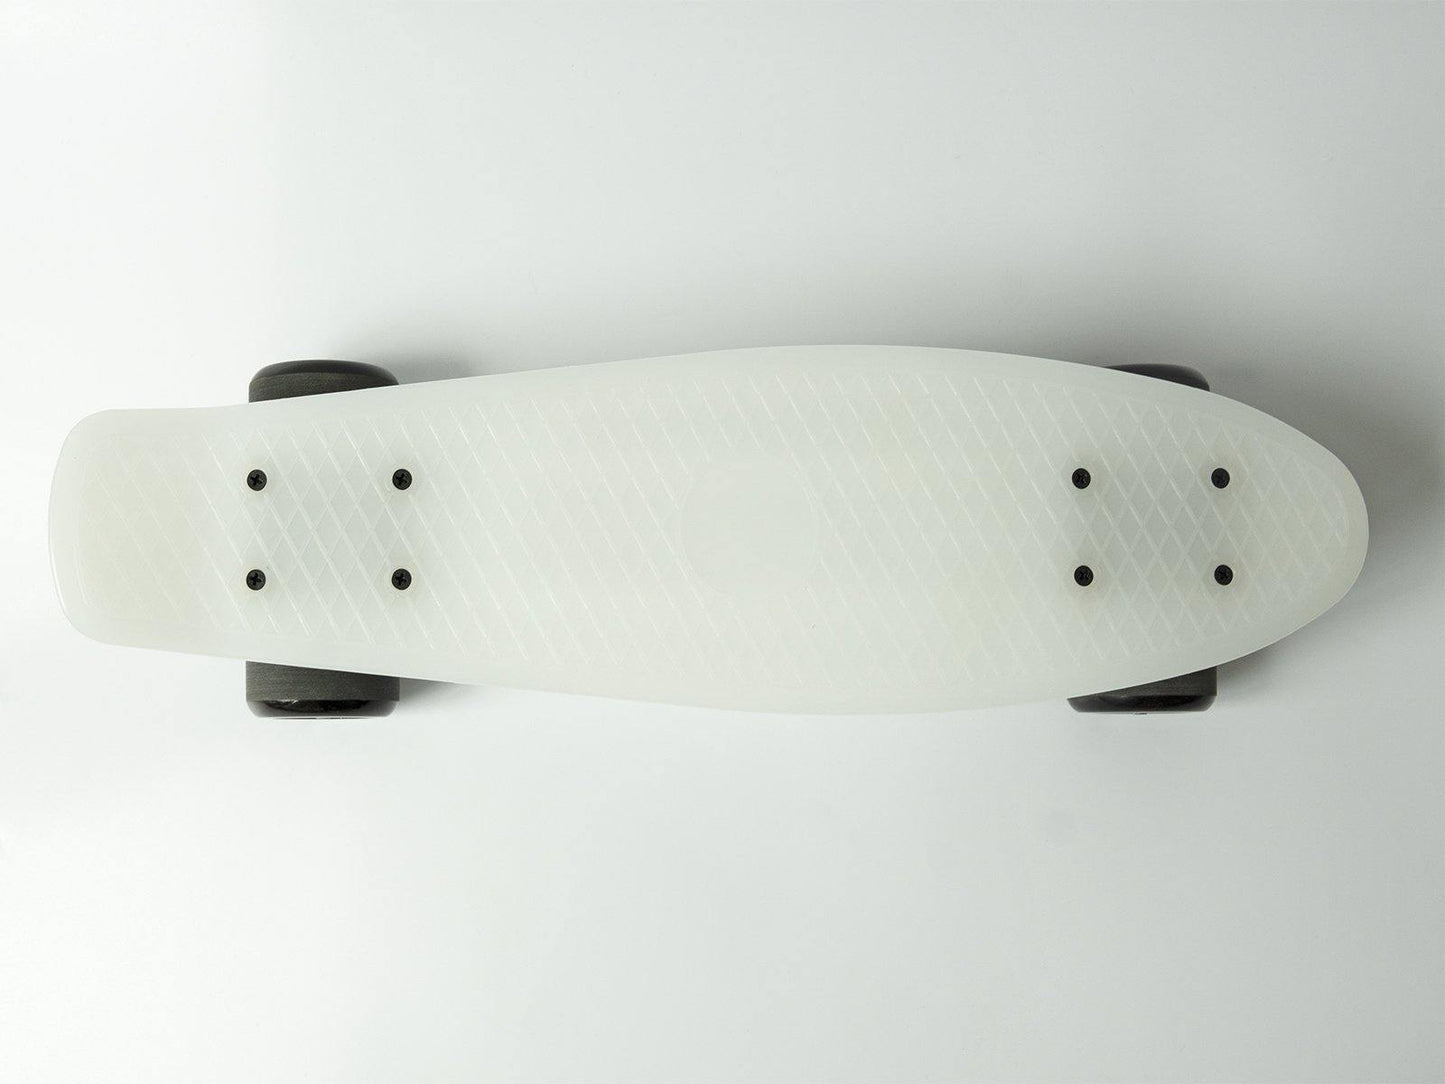 Retro Cruiser Skateboards  - White deck with black wheels - IVYPHANT